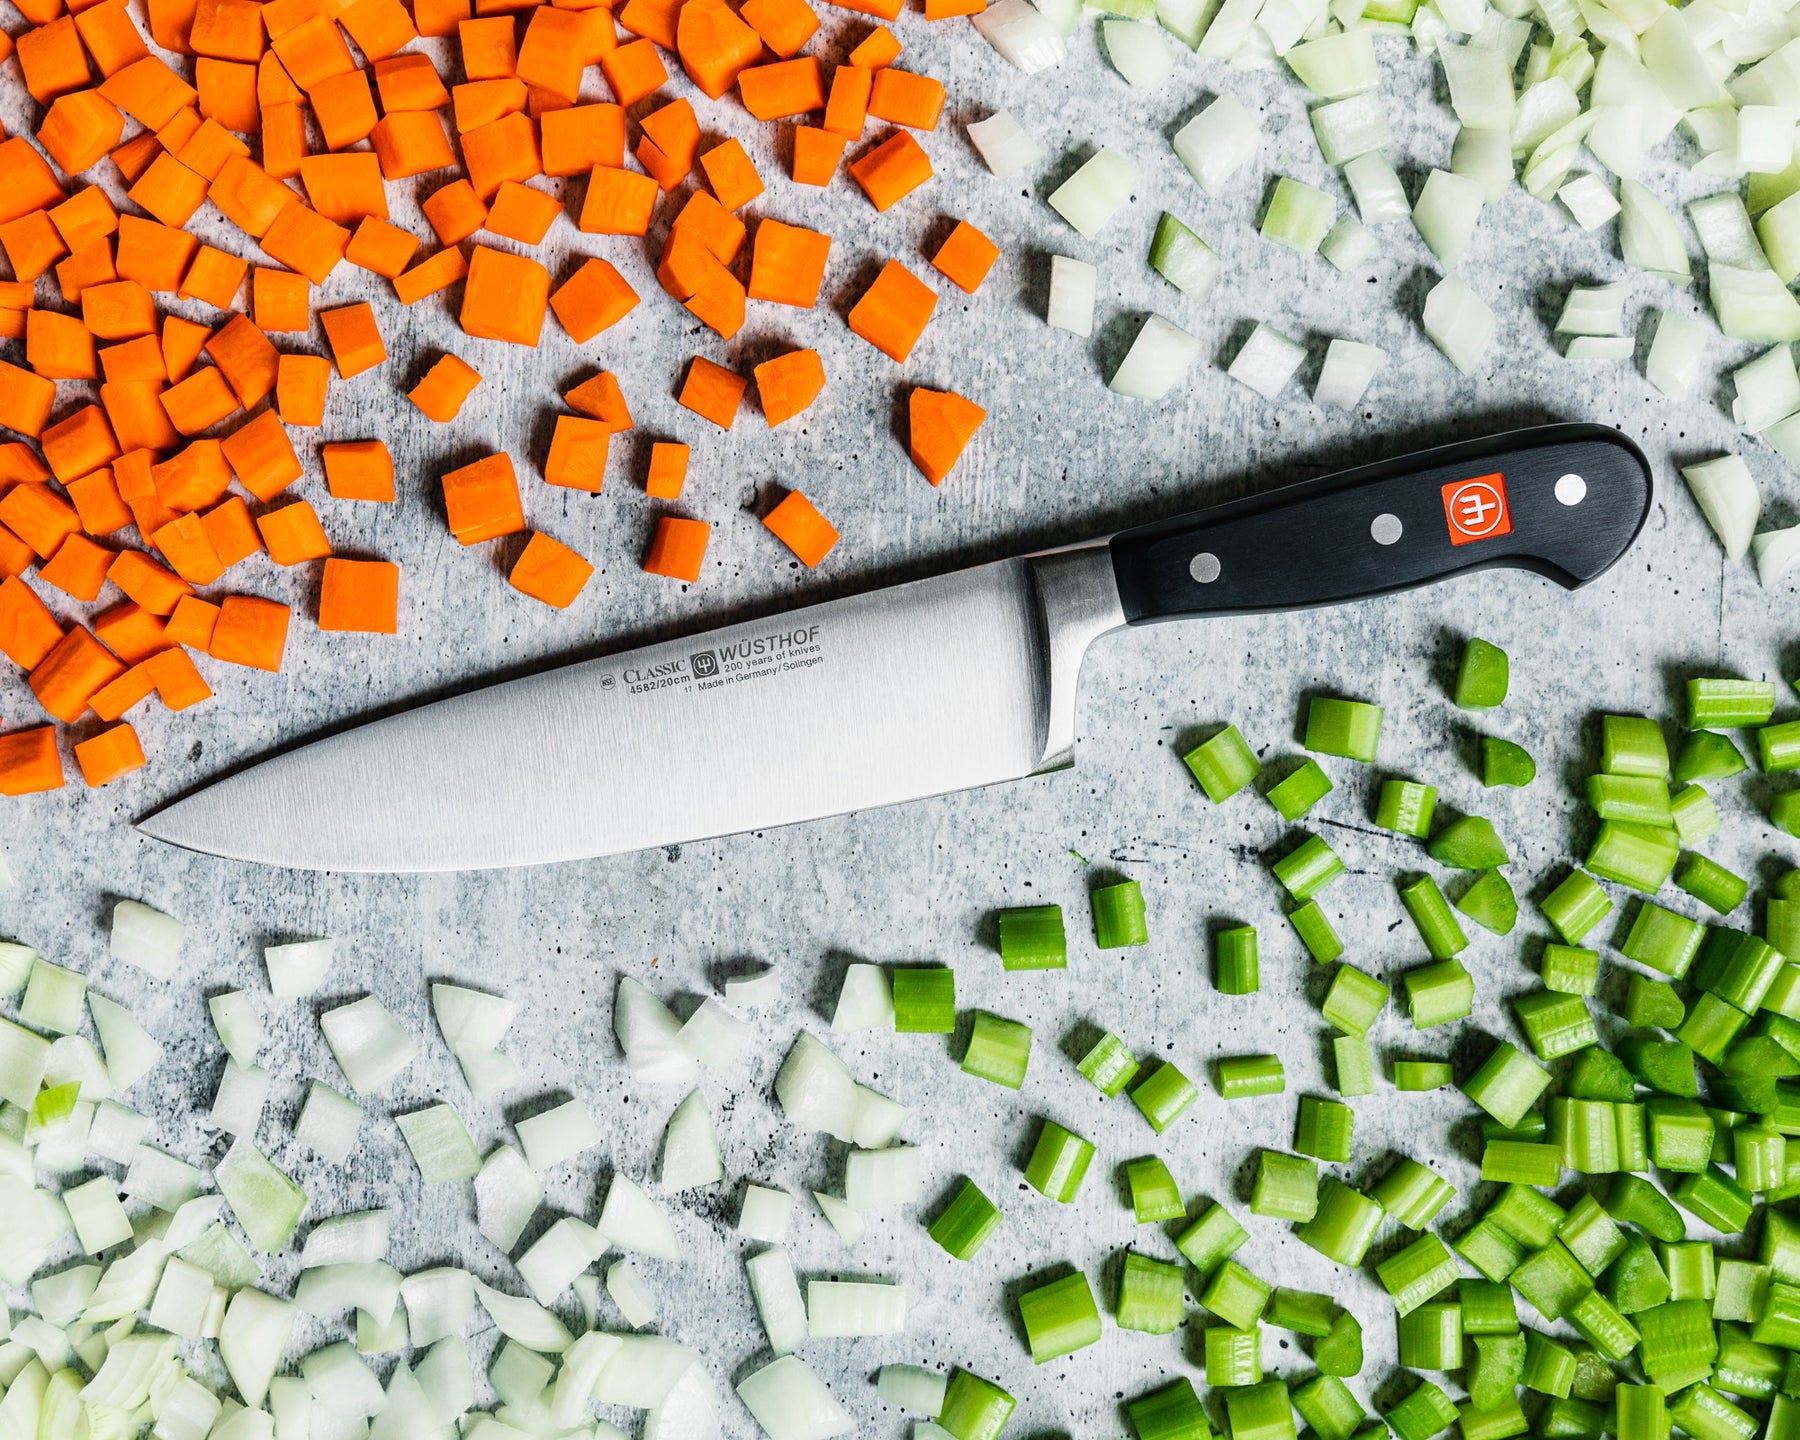 A Sharp Knife is a Cook's Best Friend!